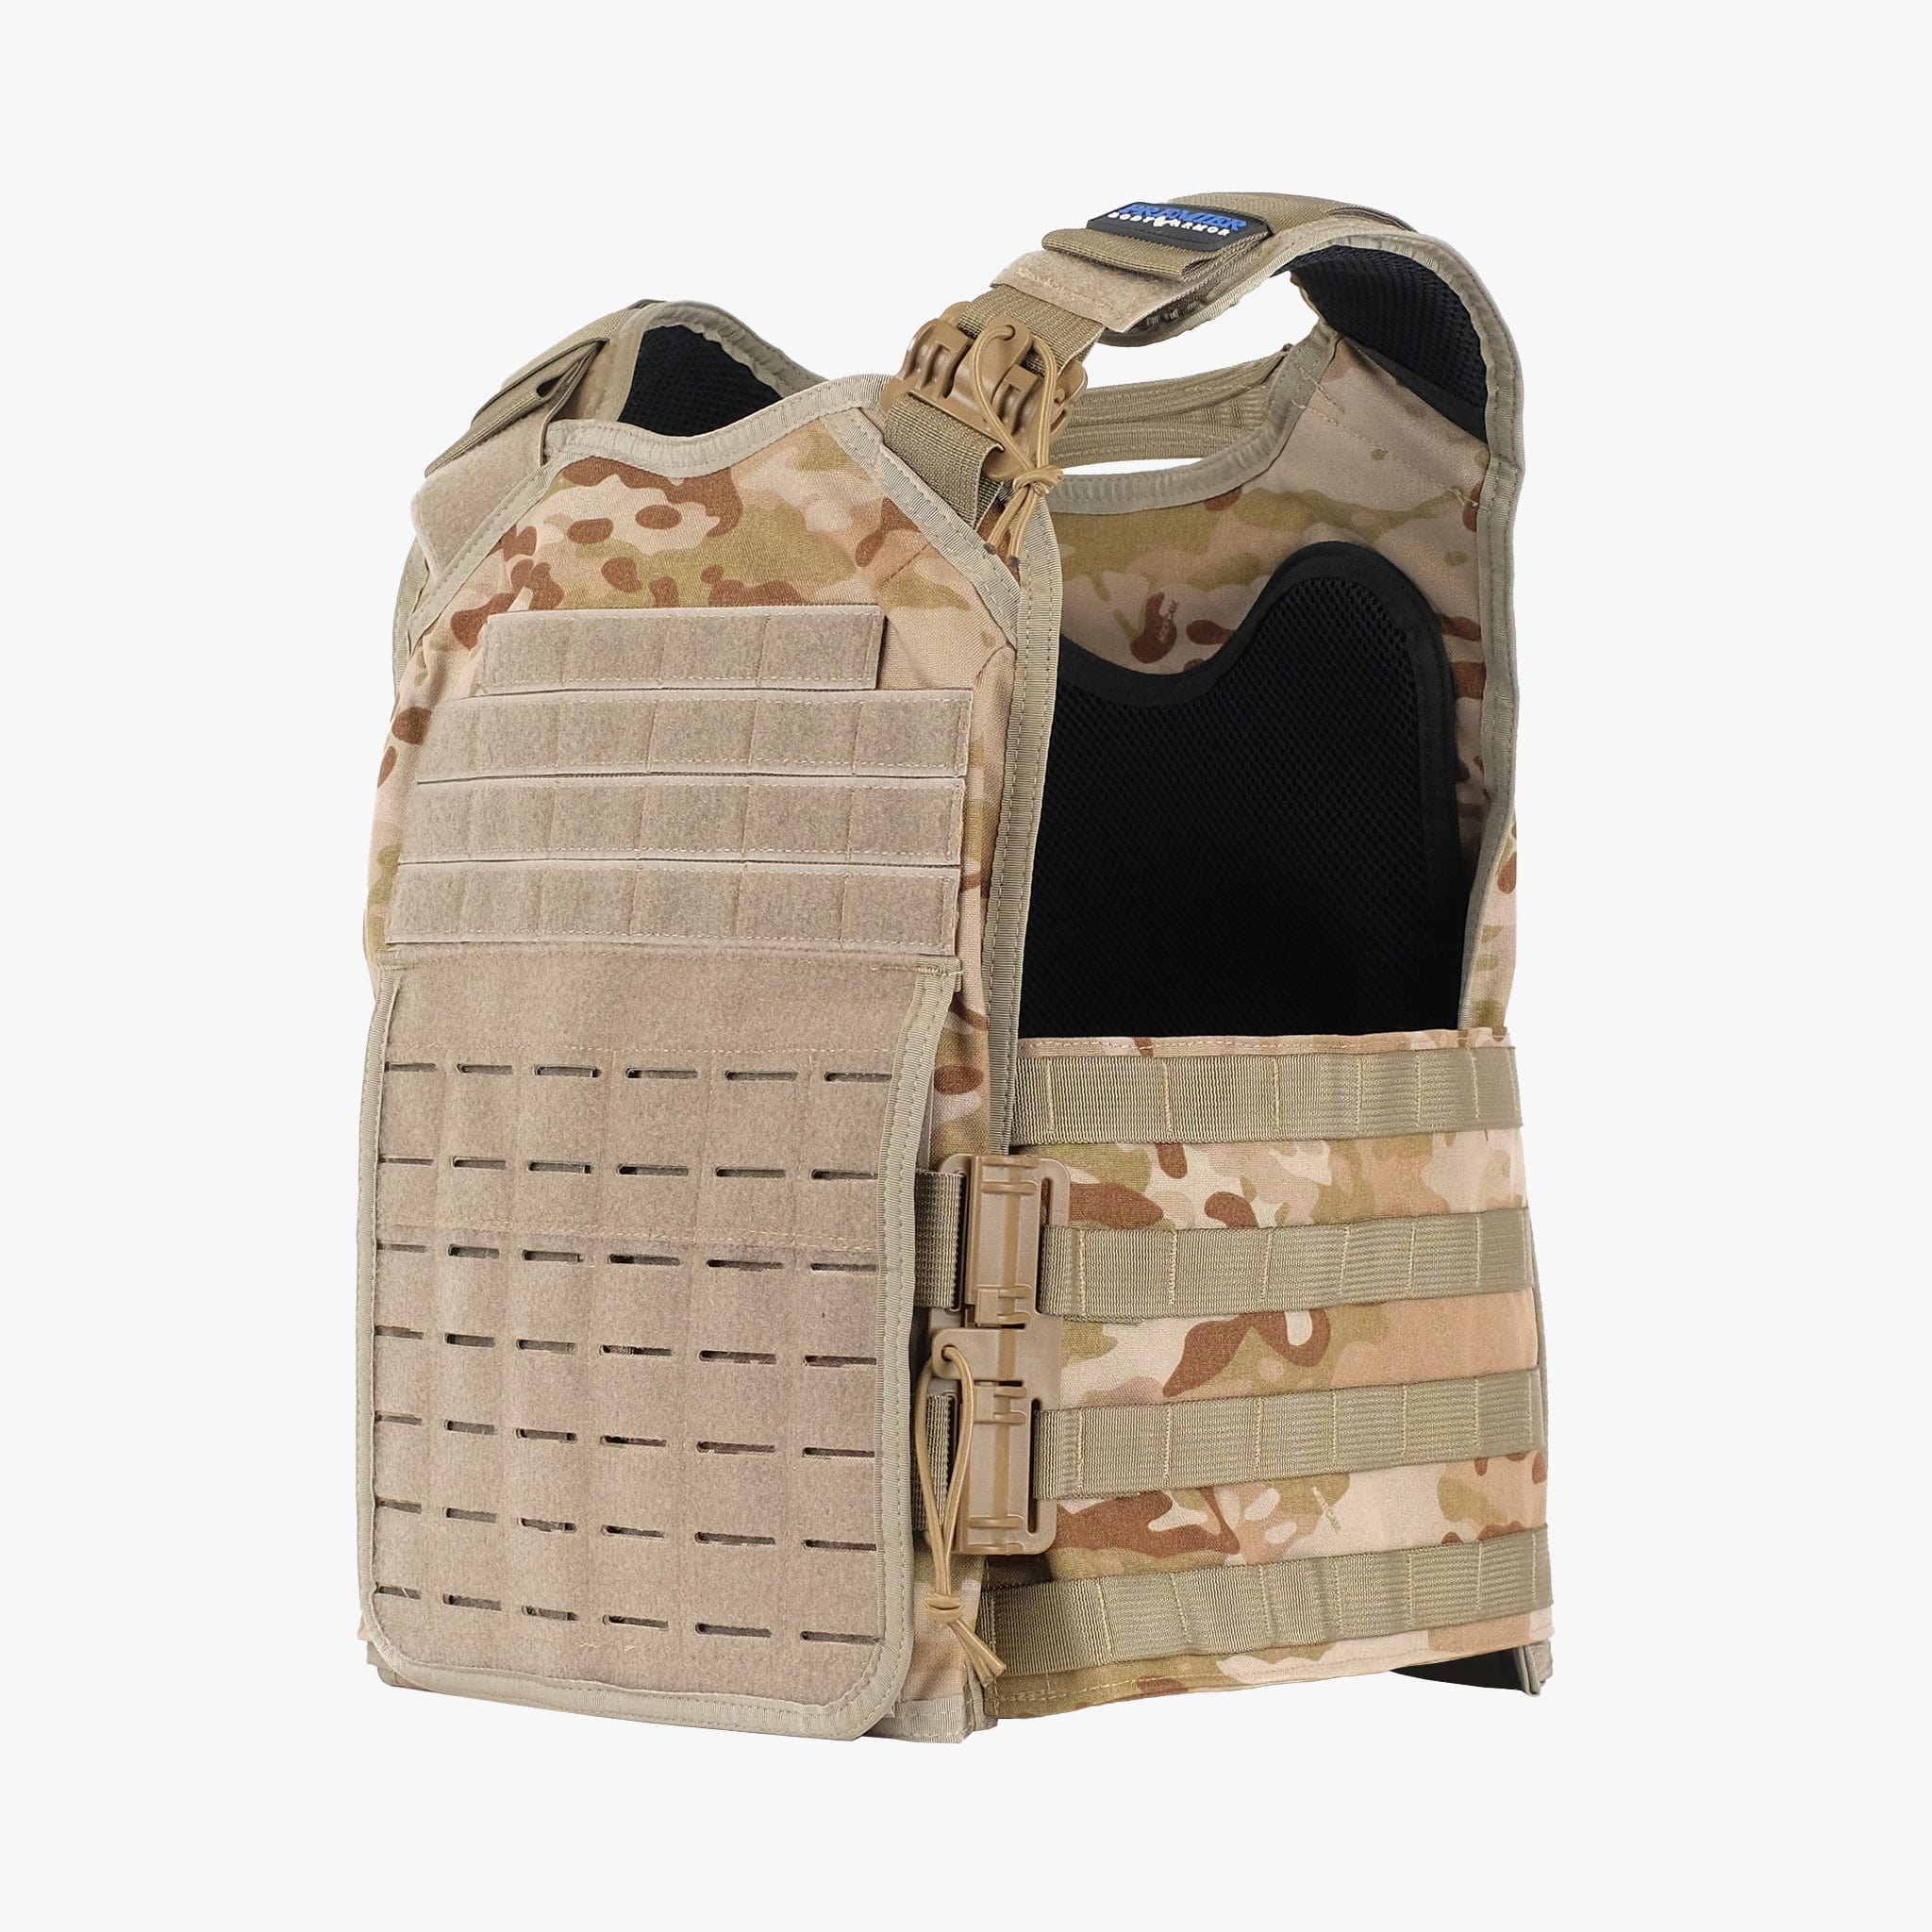 MC Armor Tactical Body Armor Vest - Level IIIA Bulletproof Protection